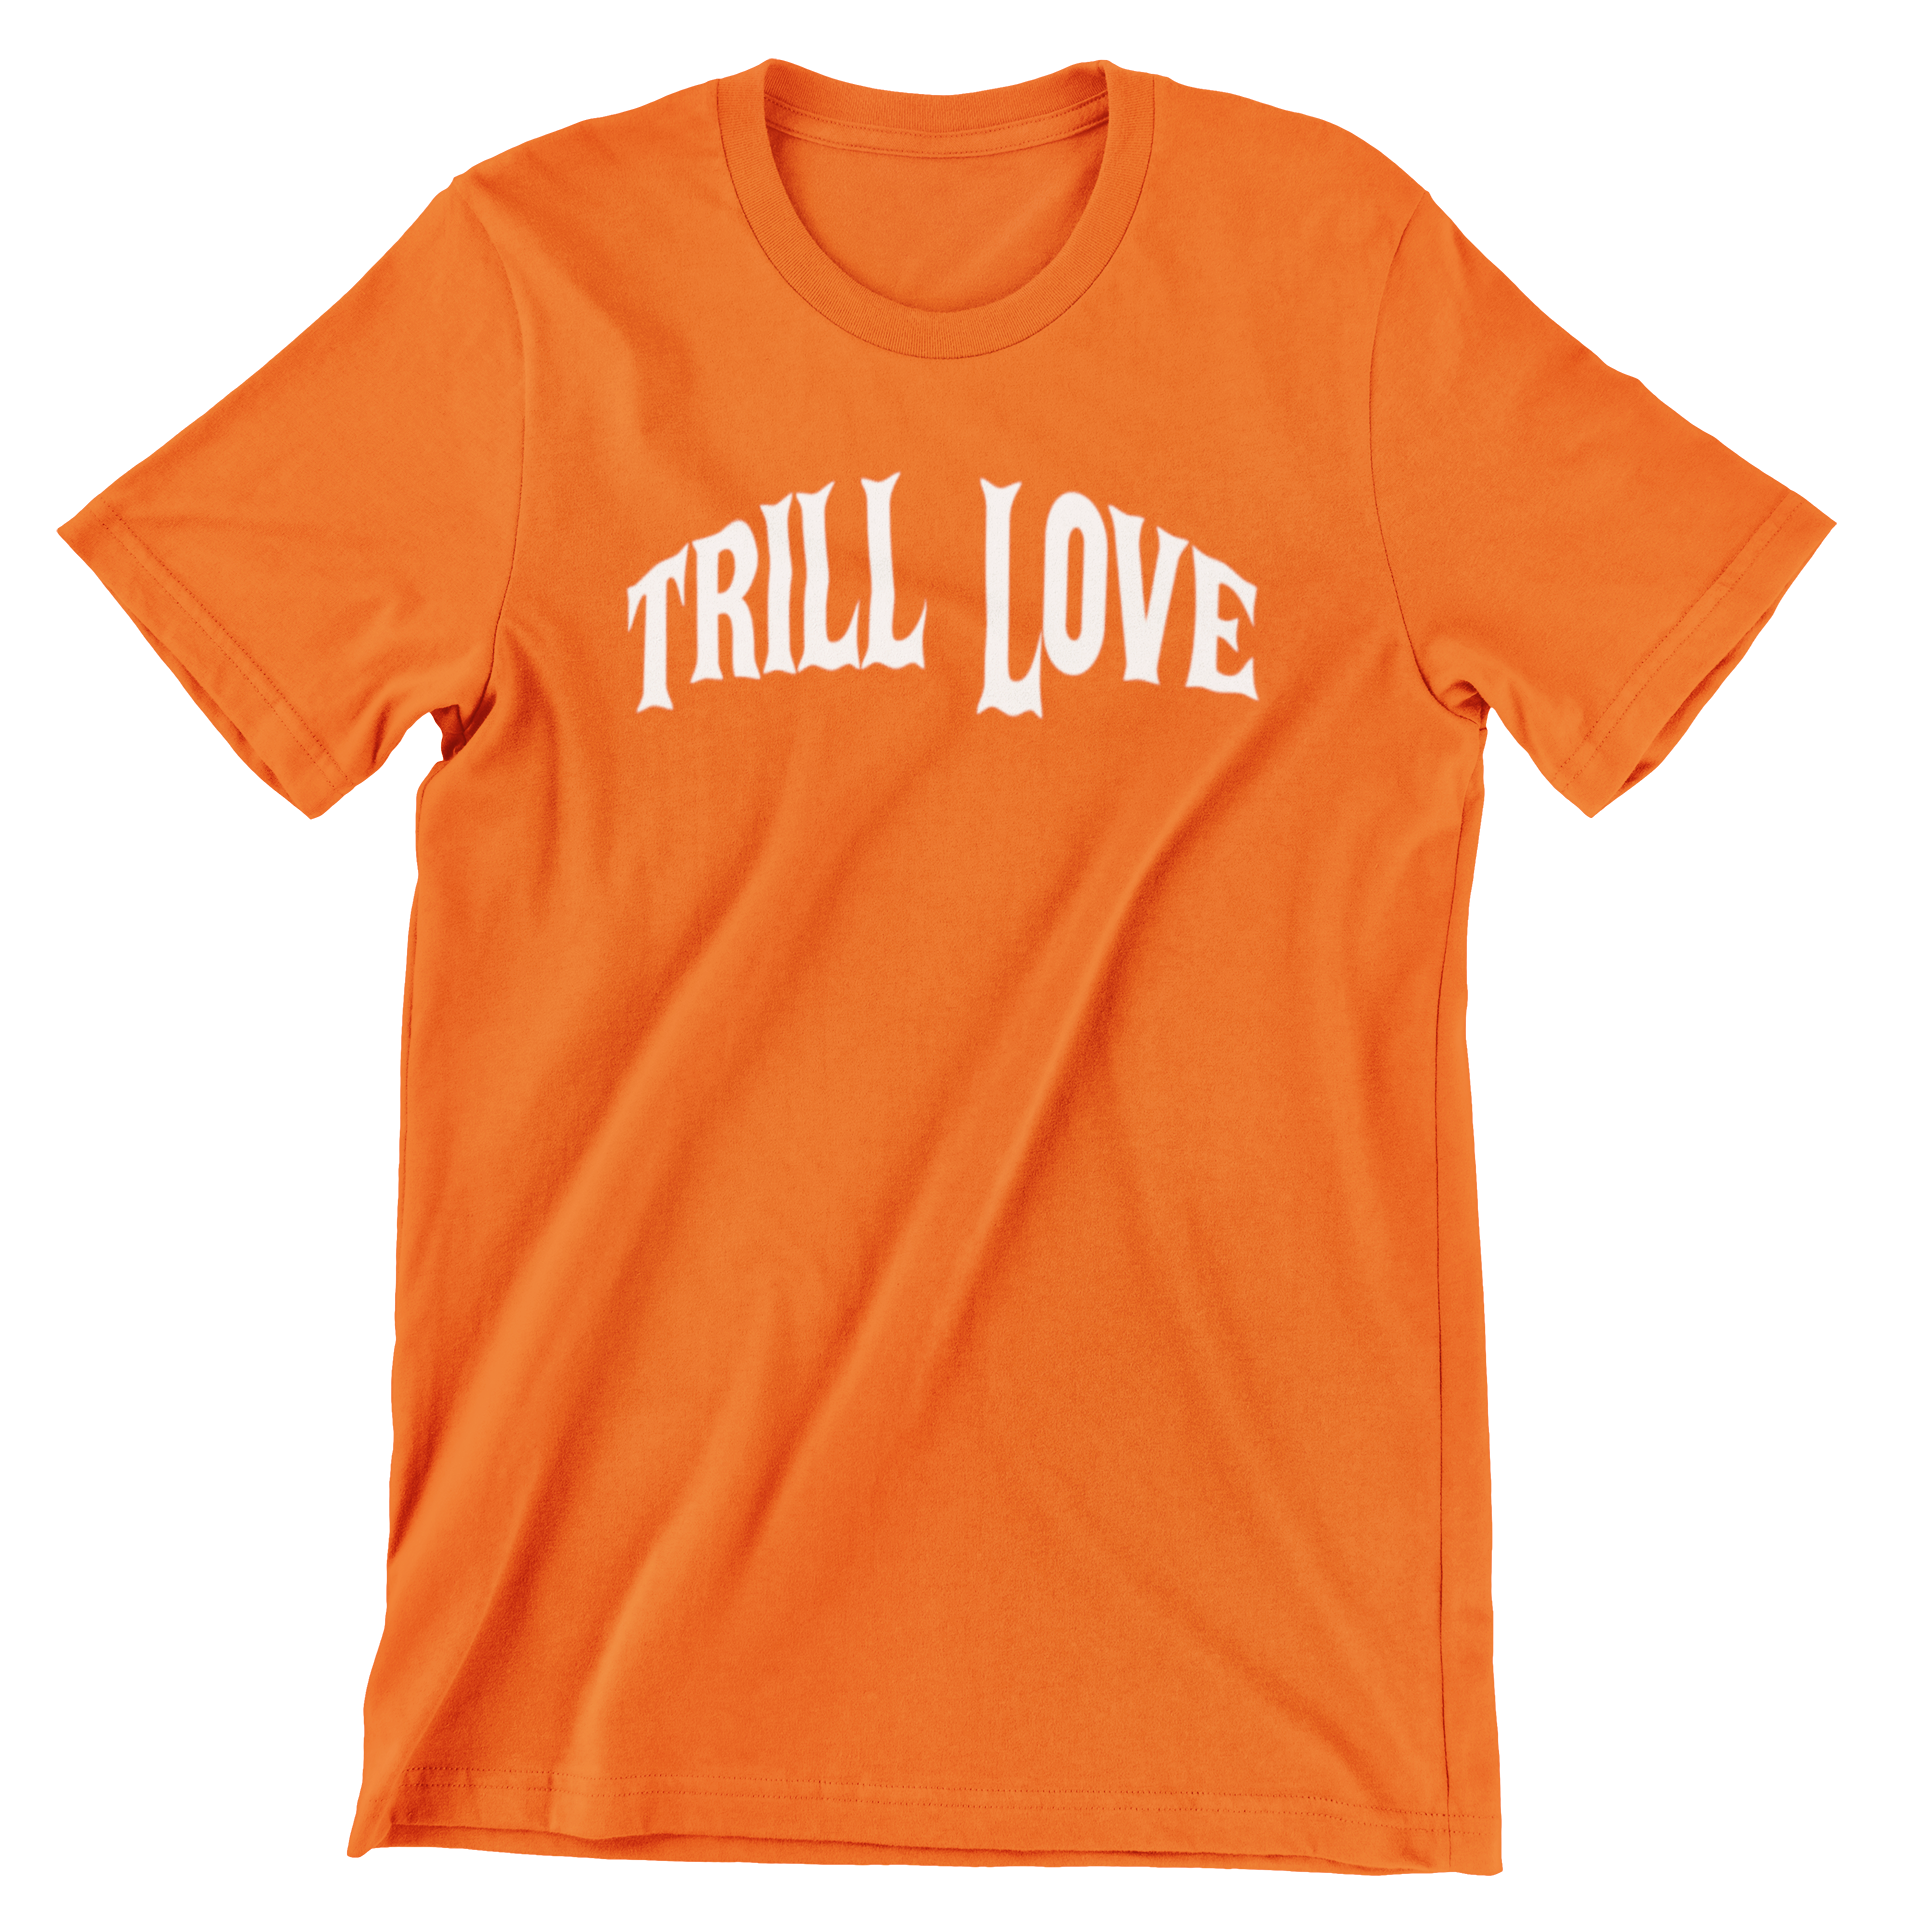 Trill Love - signature tee